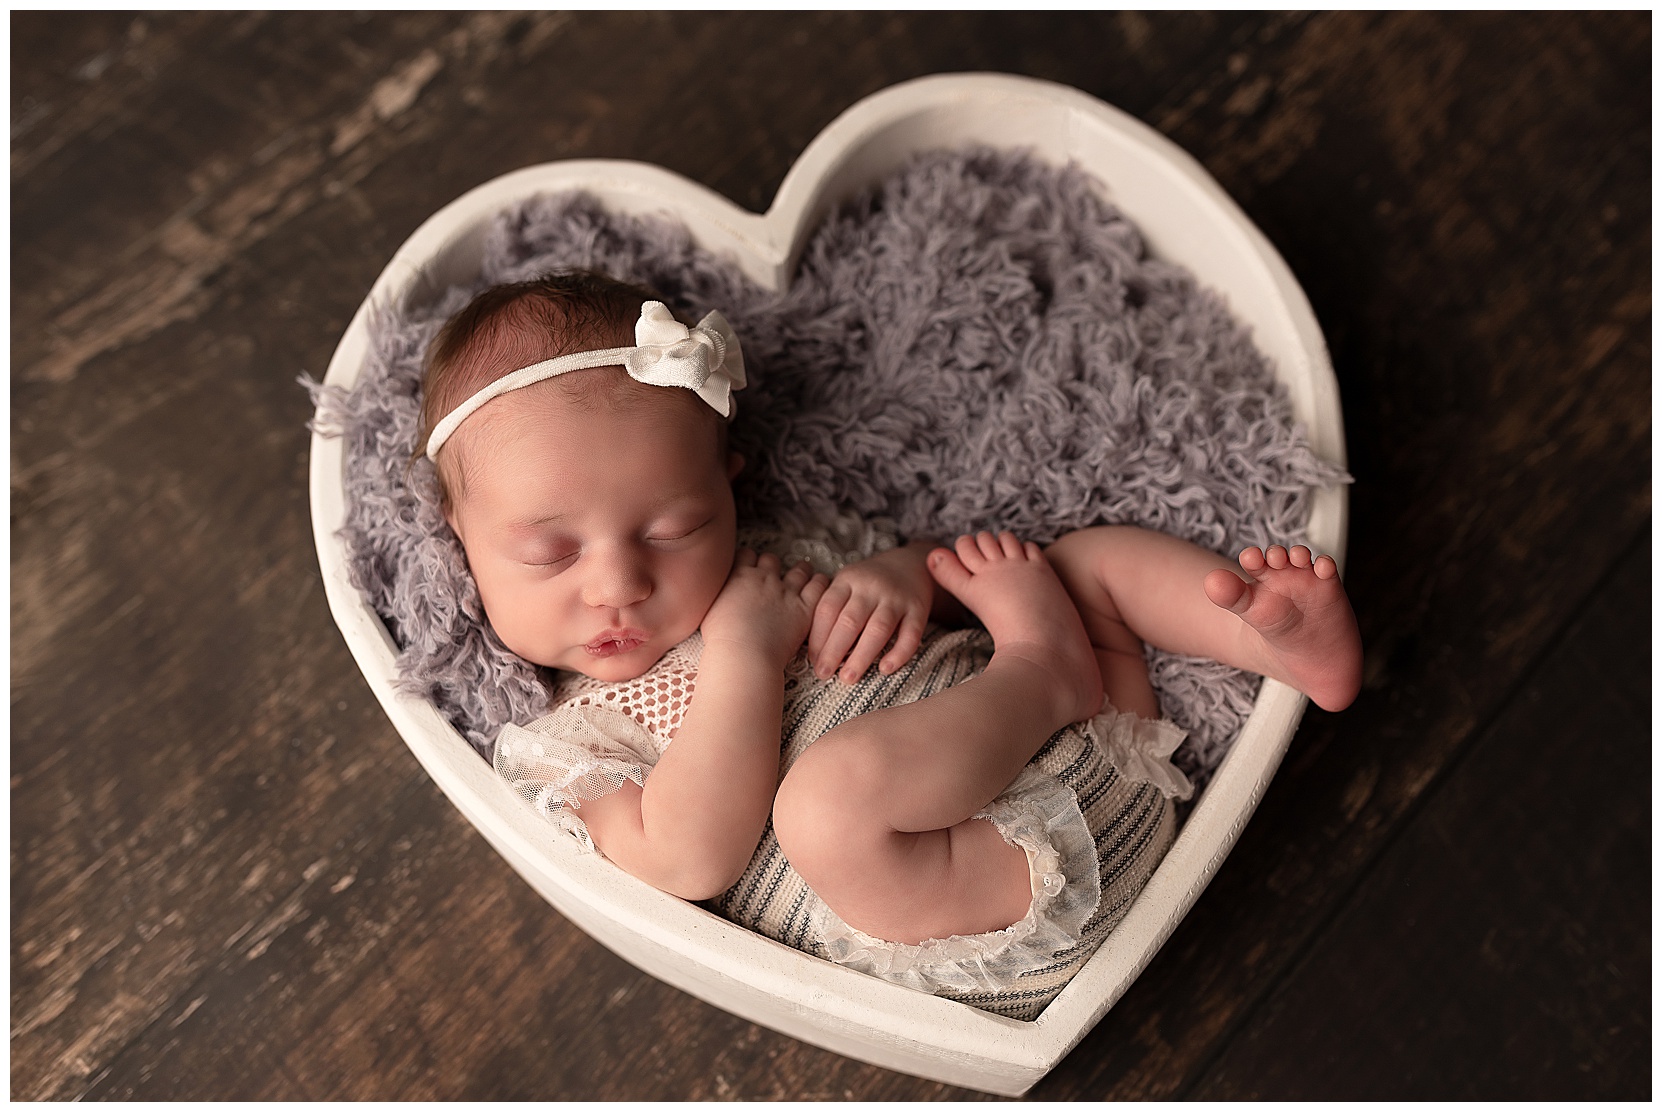 newborn baby sleeping in a white wooden heart bowl